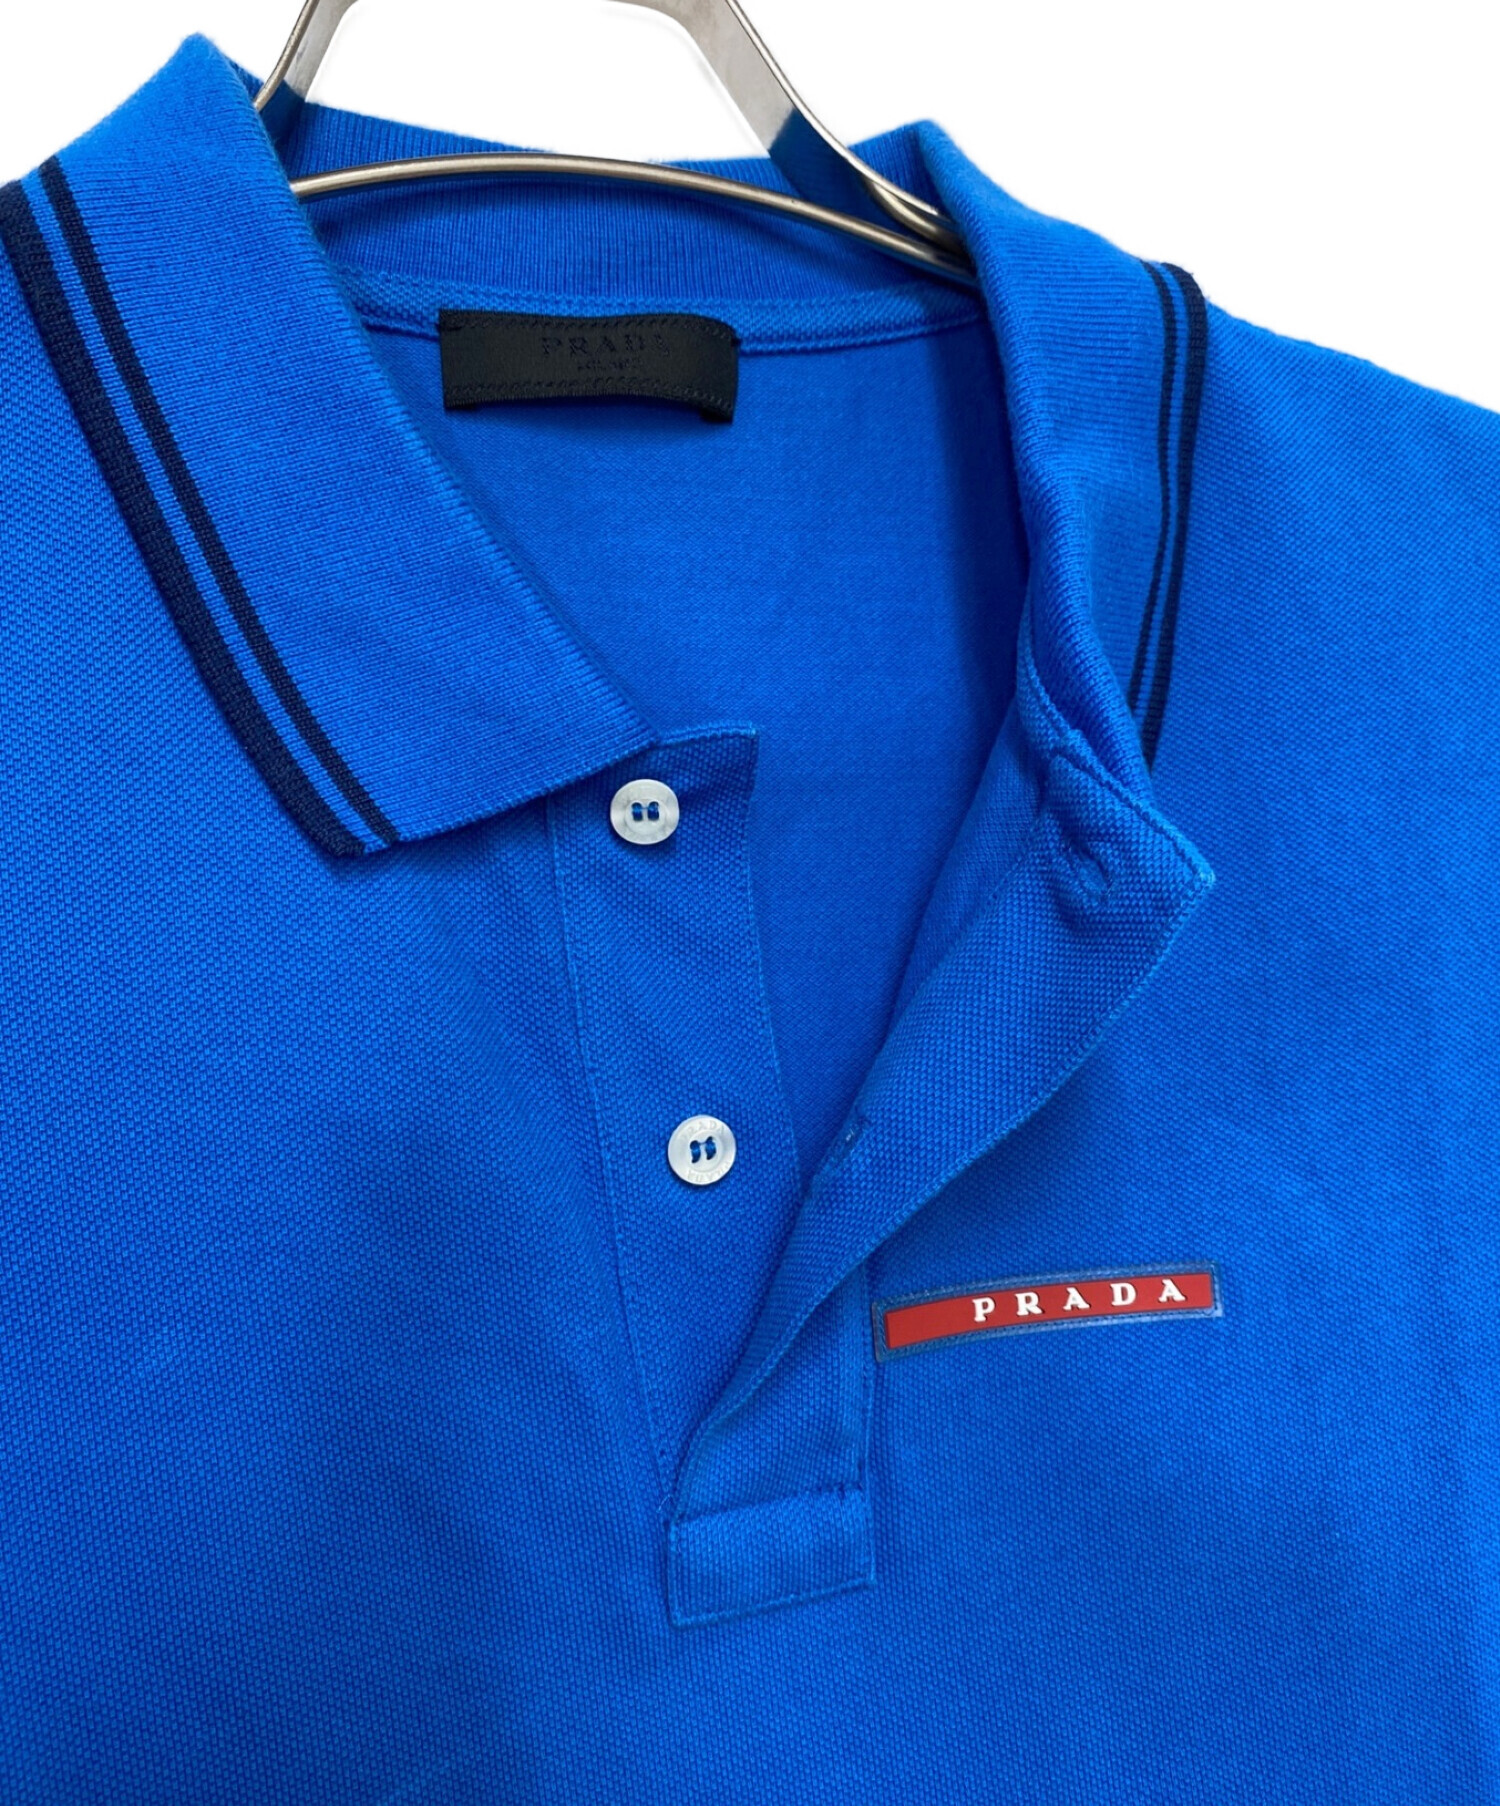 PRADA (プラダ) ポロシャツ ブルー サイズ: M